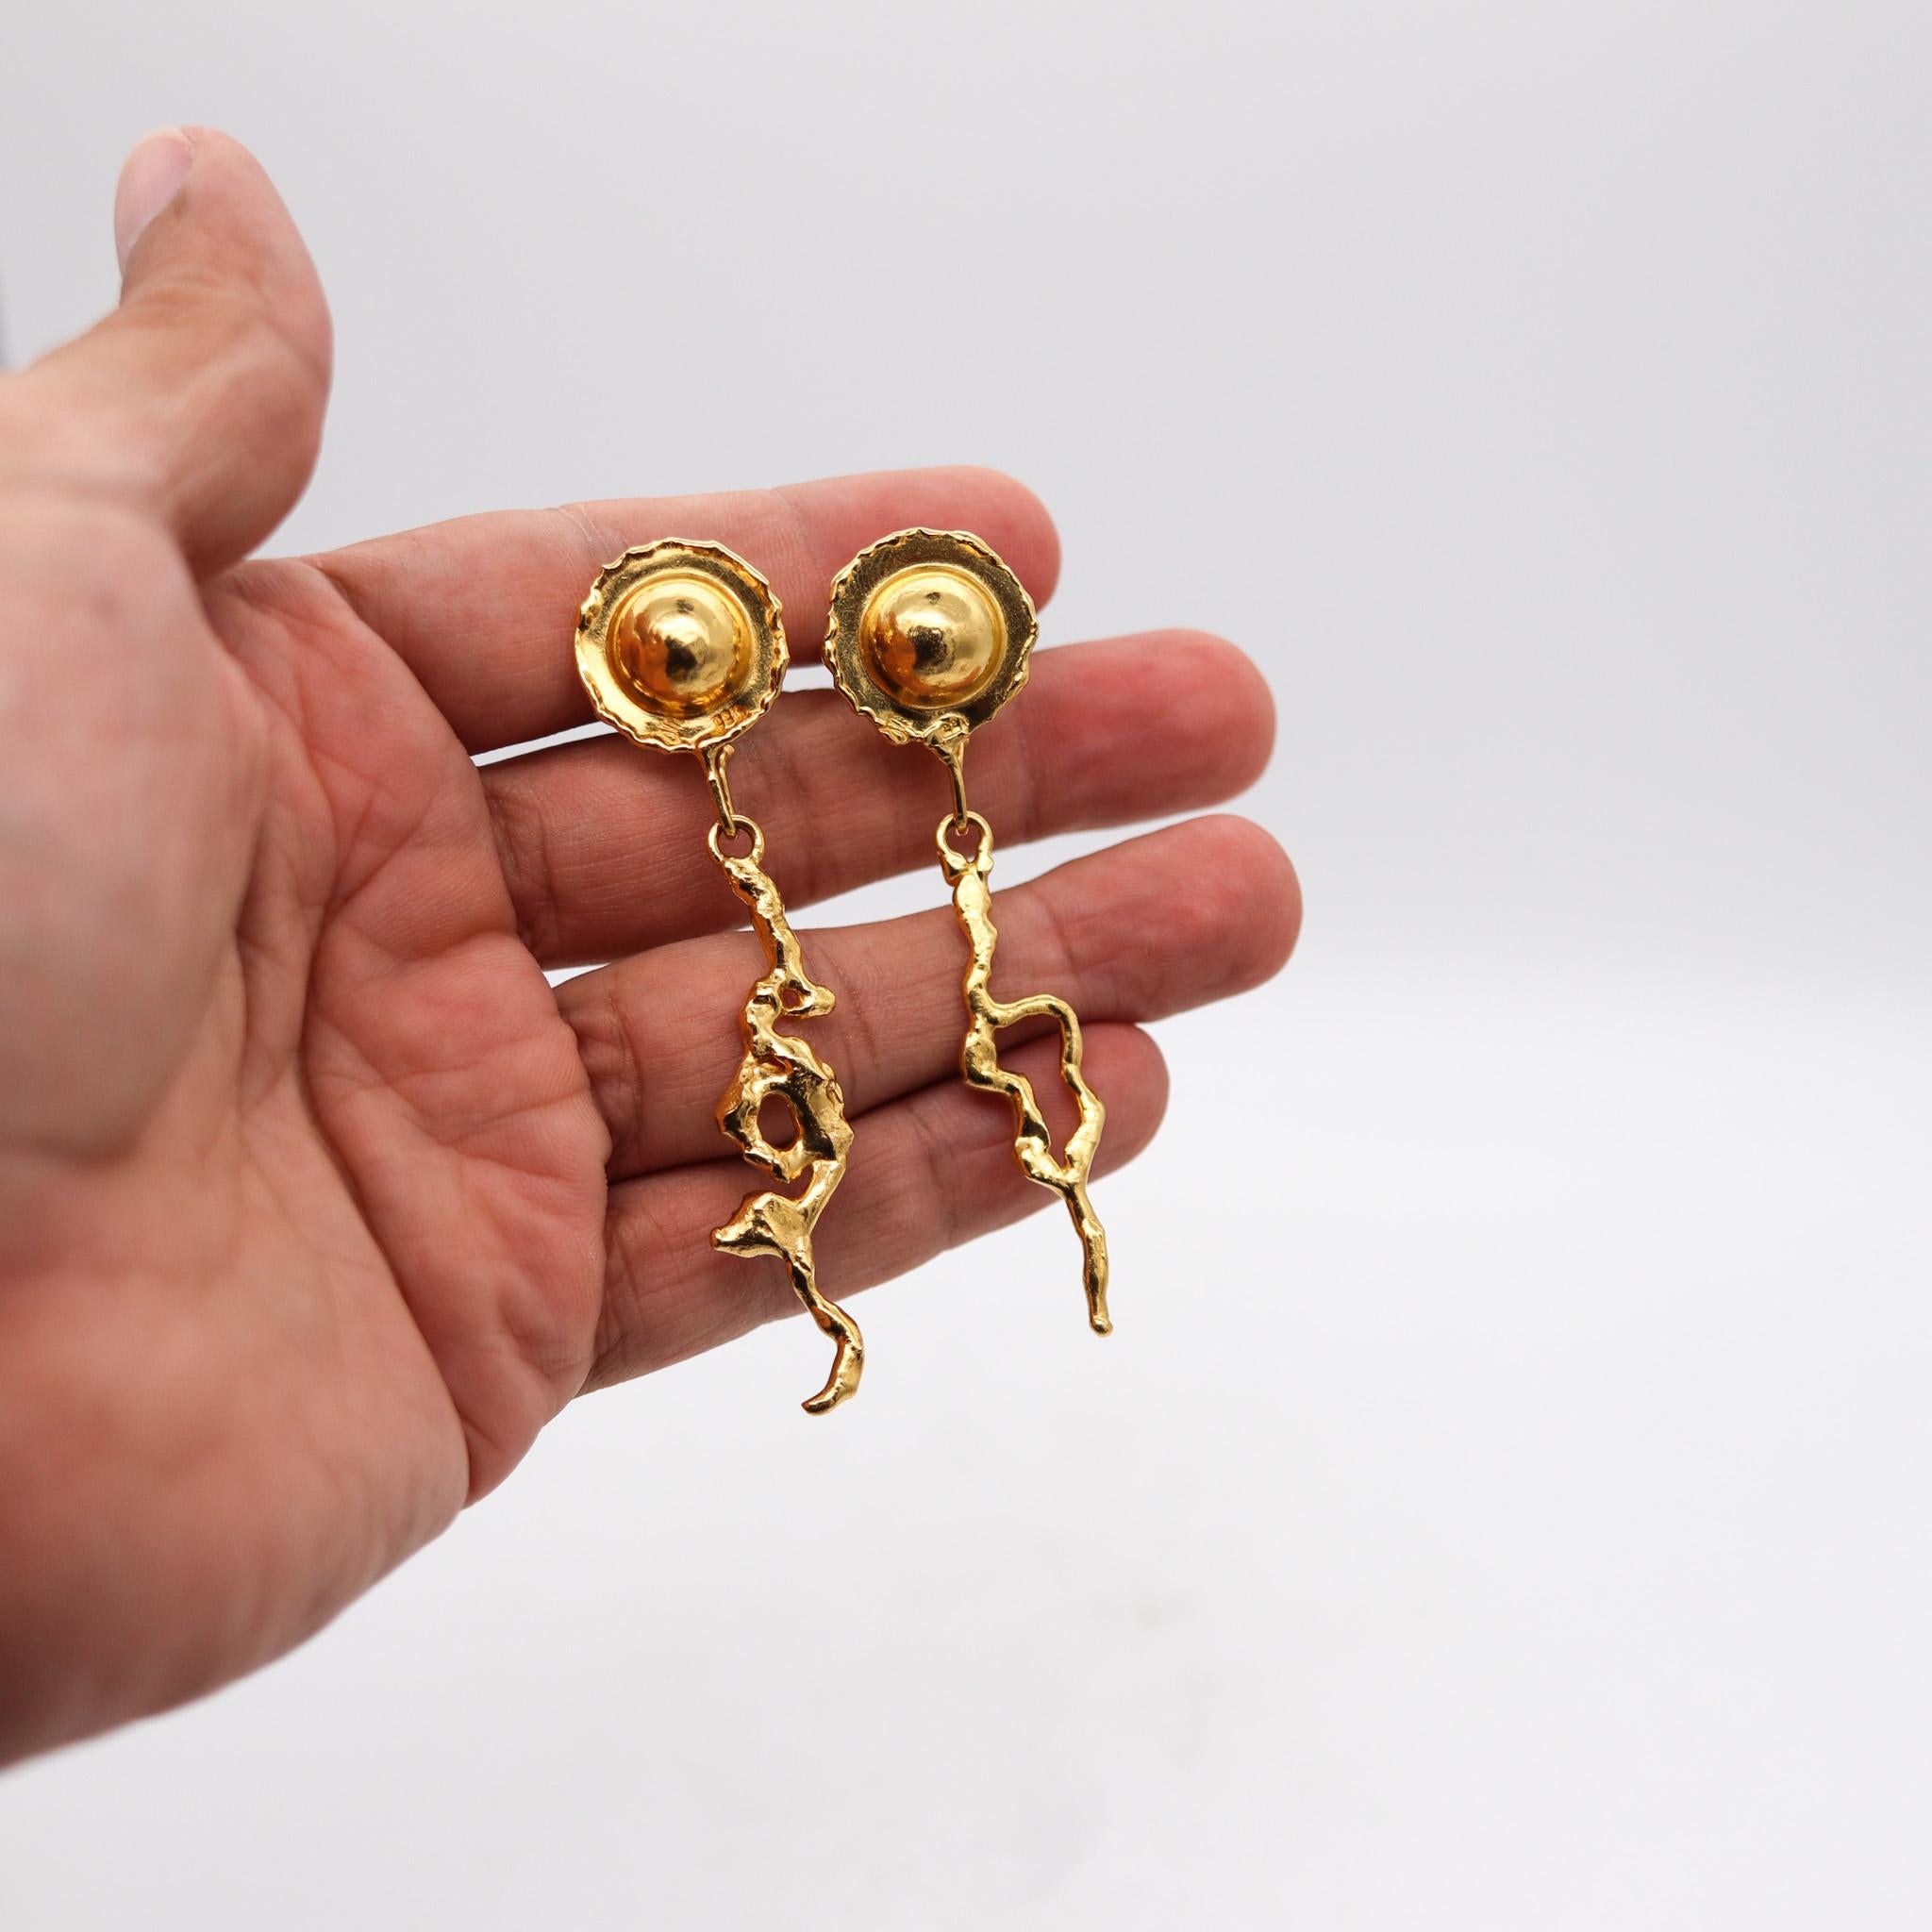 Jean Mahie Paris Artistic Convertible Dangle Earrings Textured 22k Yellow Gold For Sale 2